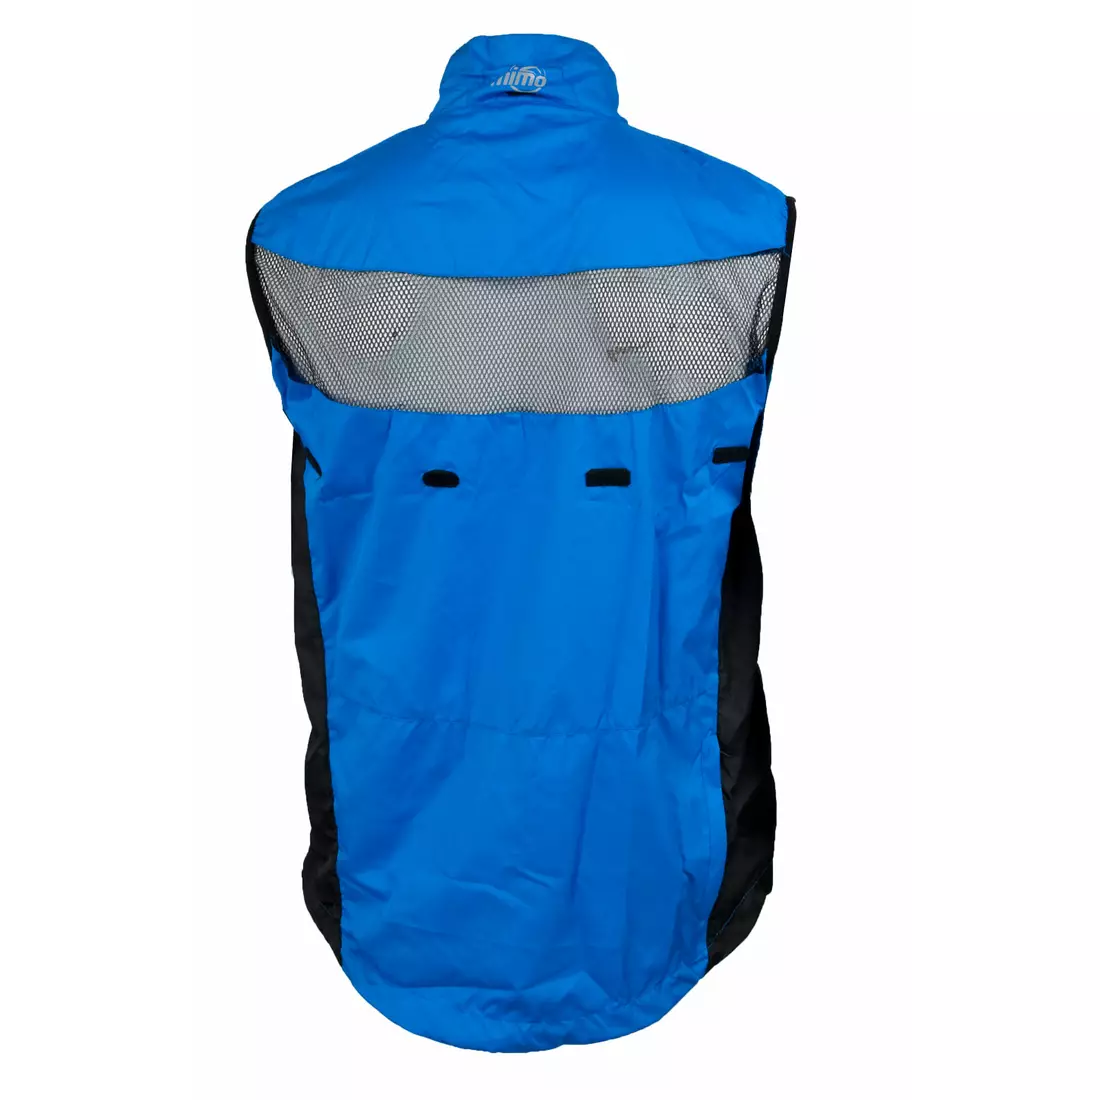 MikeSPORT SWORD - cyklistická bunda, odepínací rukávy, barva: Černá a modrá